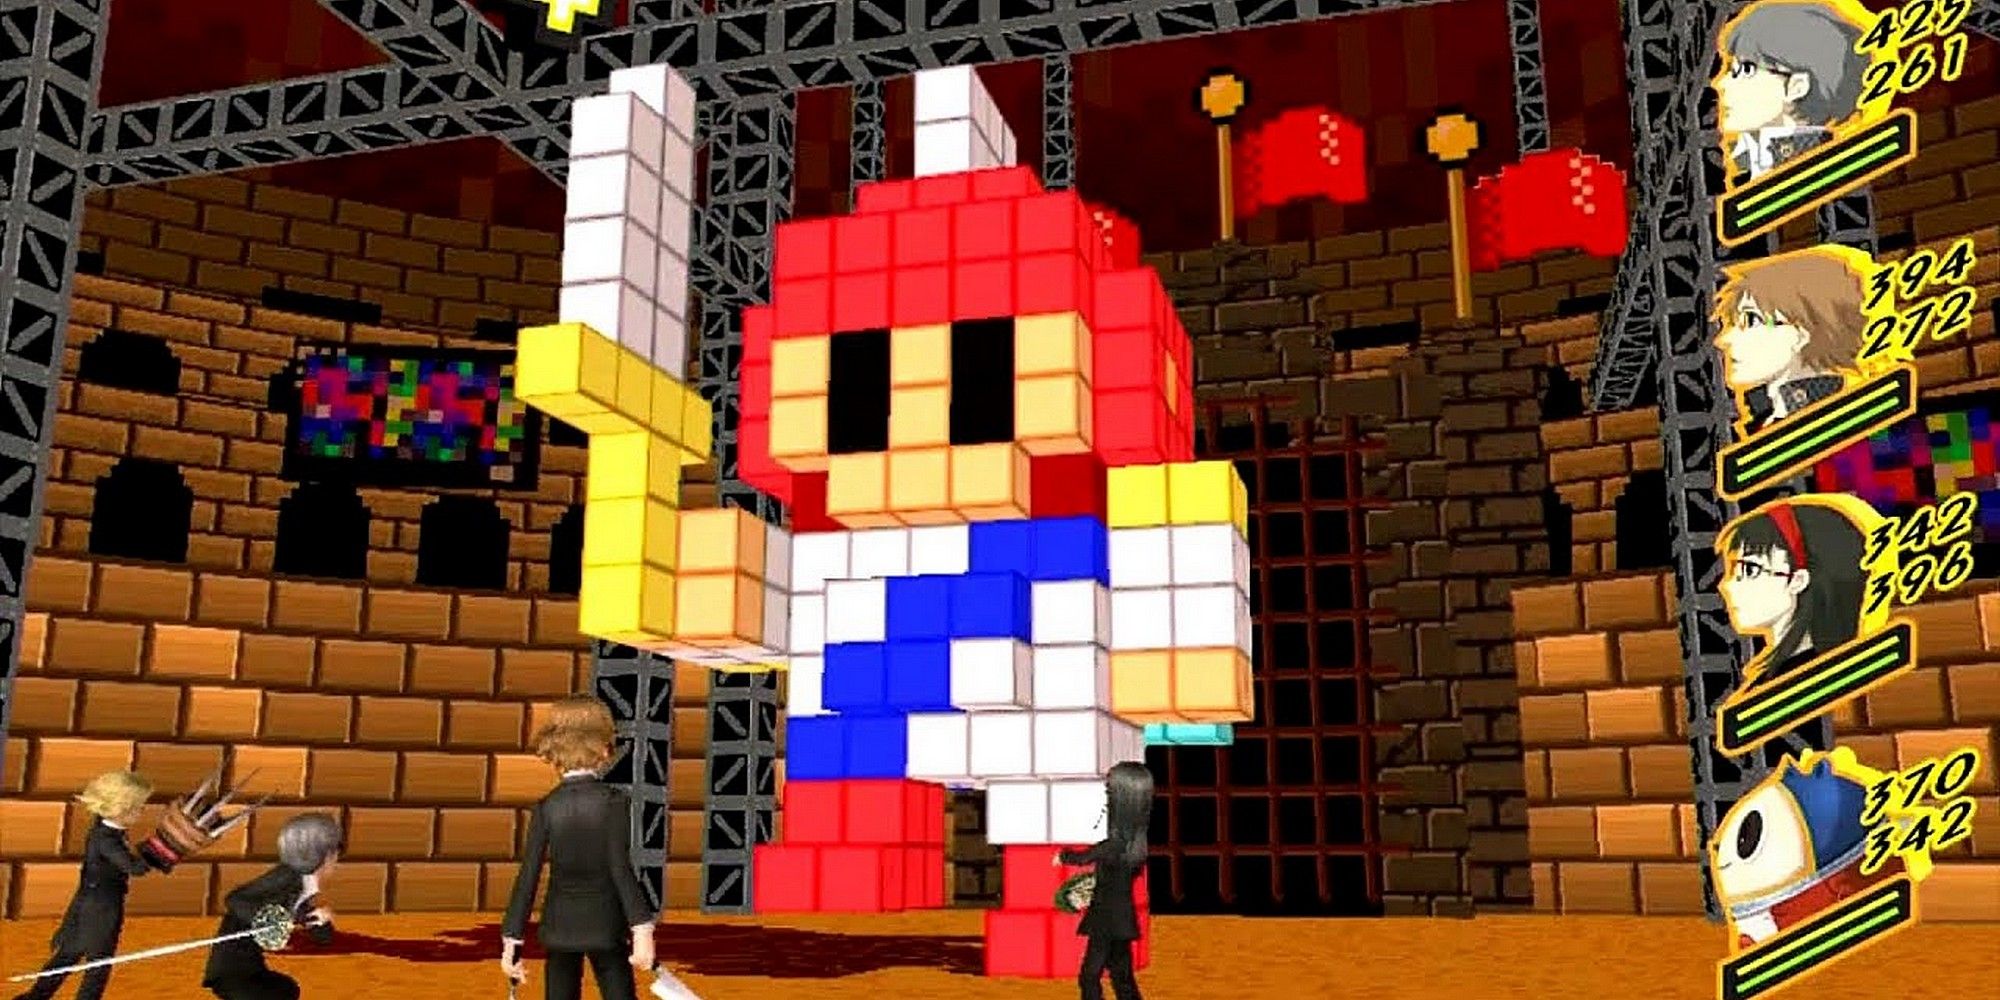 Persona-4-Mitsuos-Void-Quest-Pixel-8-Bit-Boss-Blocks-Dungeon-1